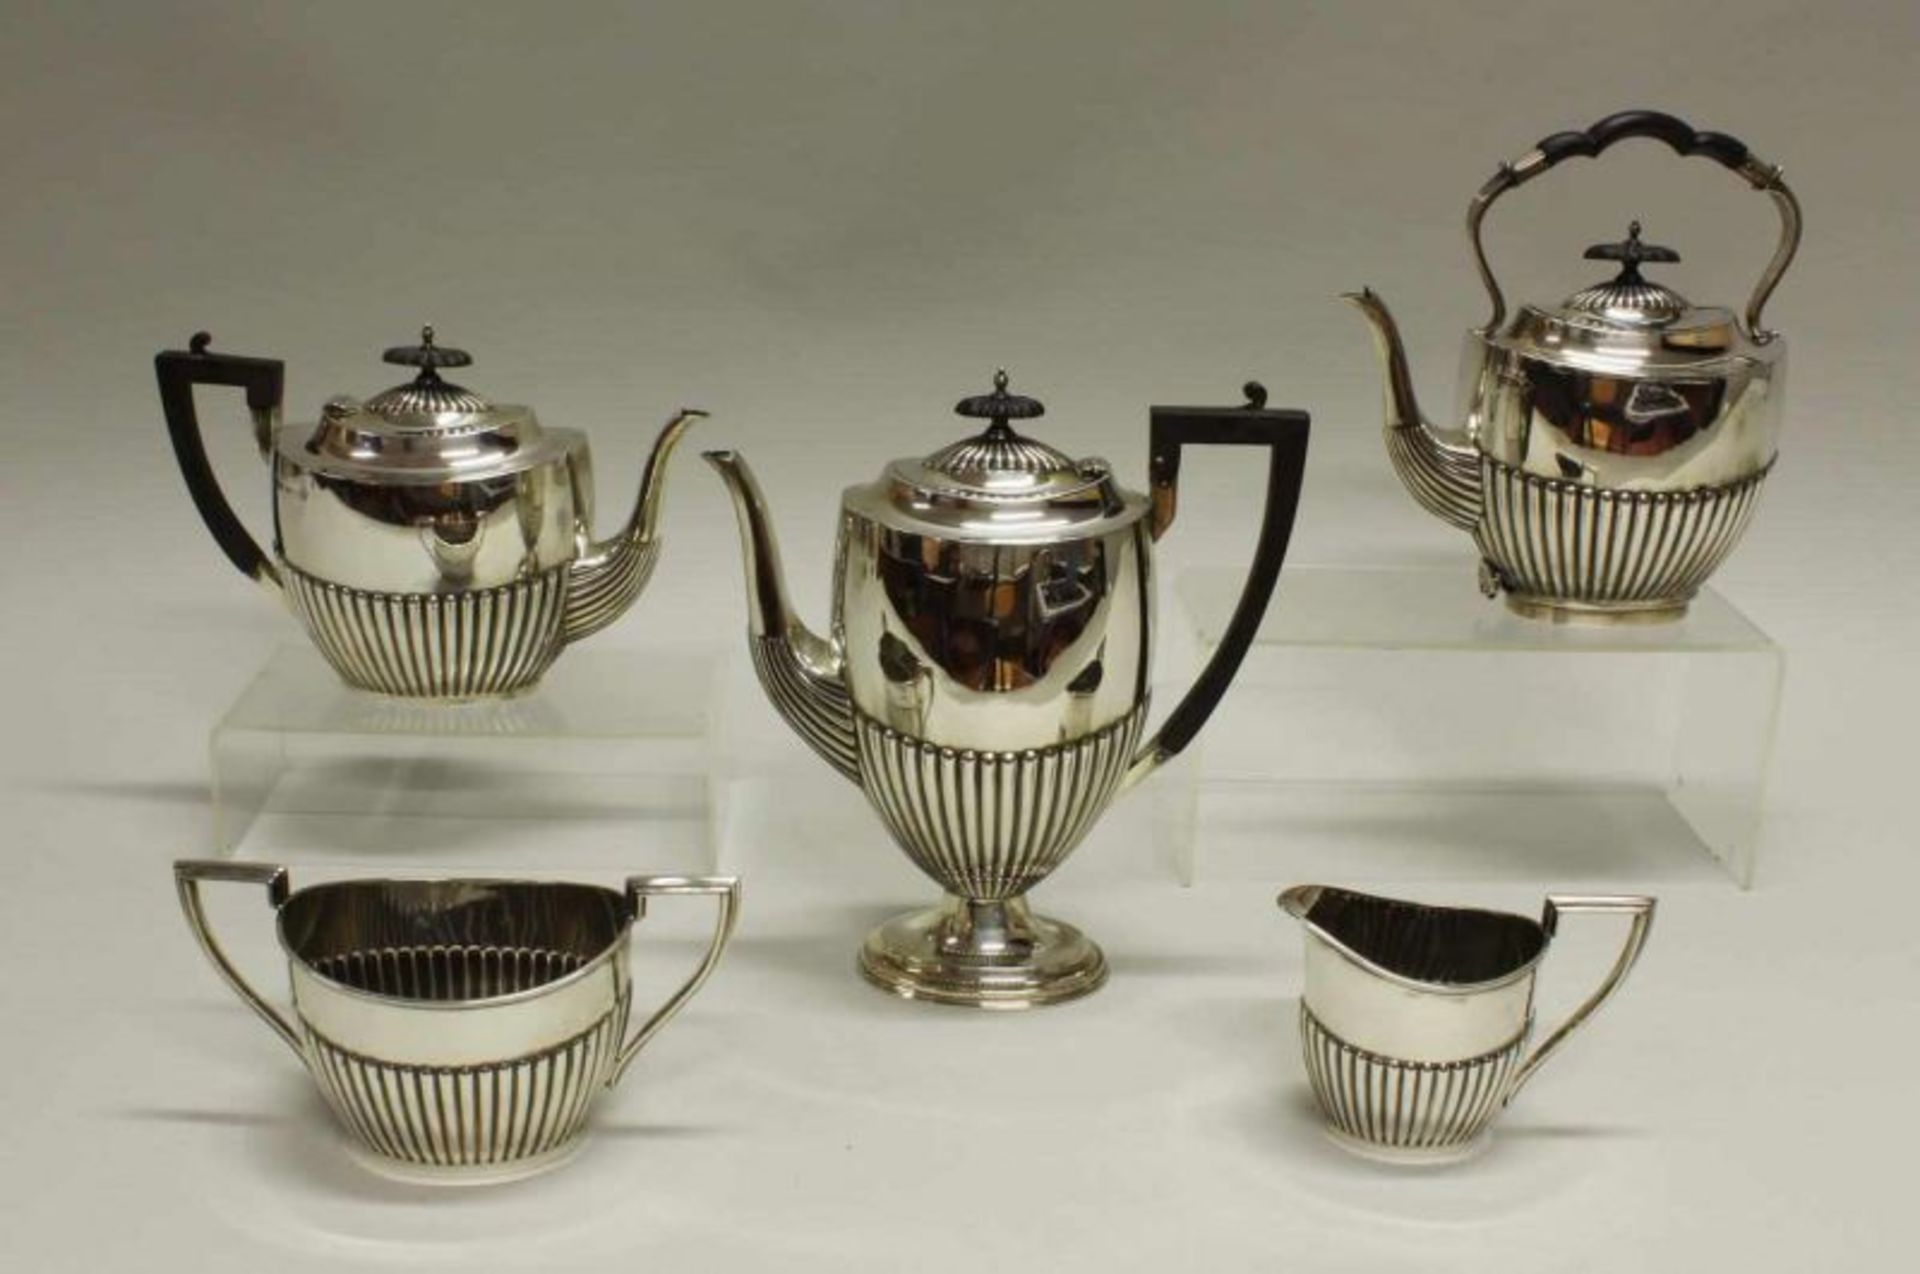 Kaffee- und Teeservice, Silber 925, Sheffield, 1905, Walker & Hall, oval, godronierter Dekor, Henkel